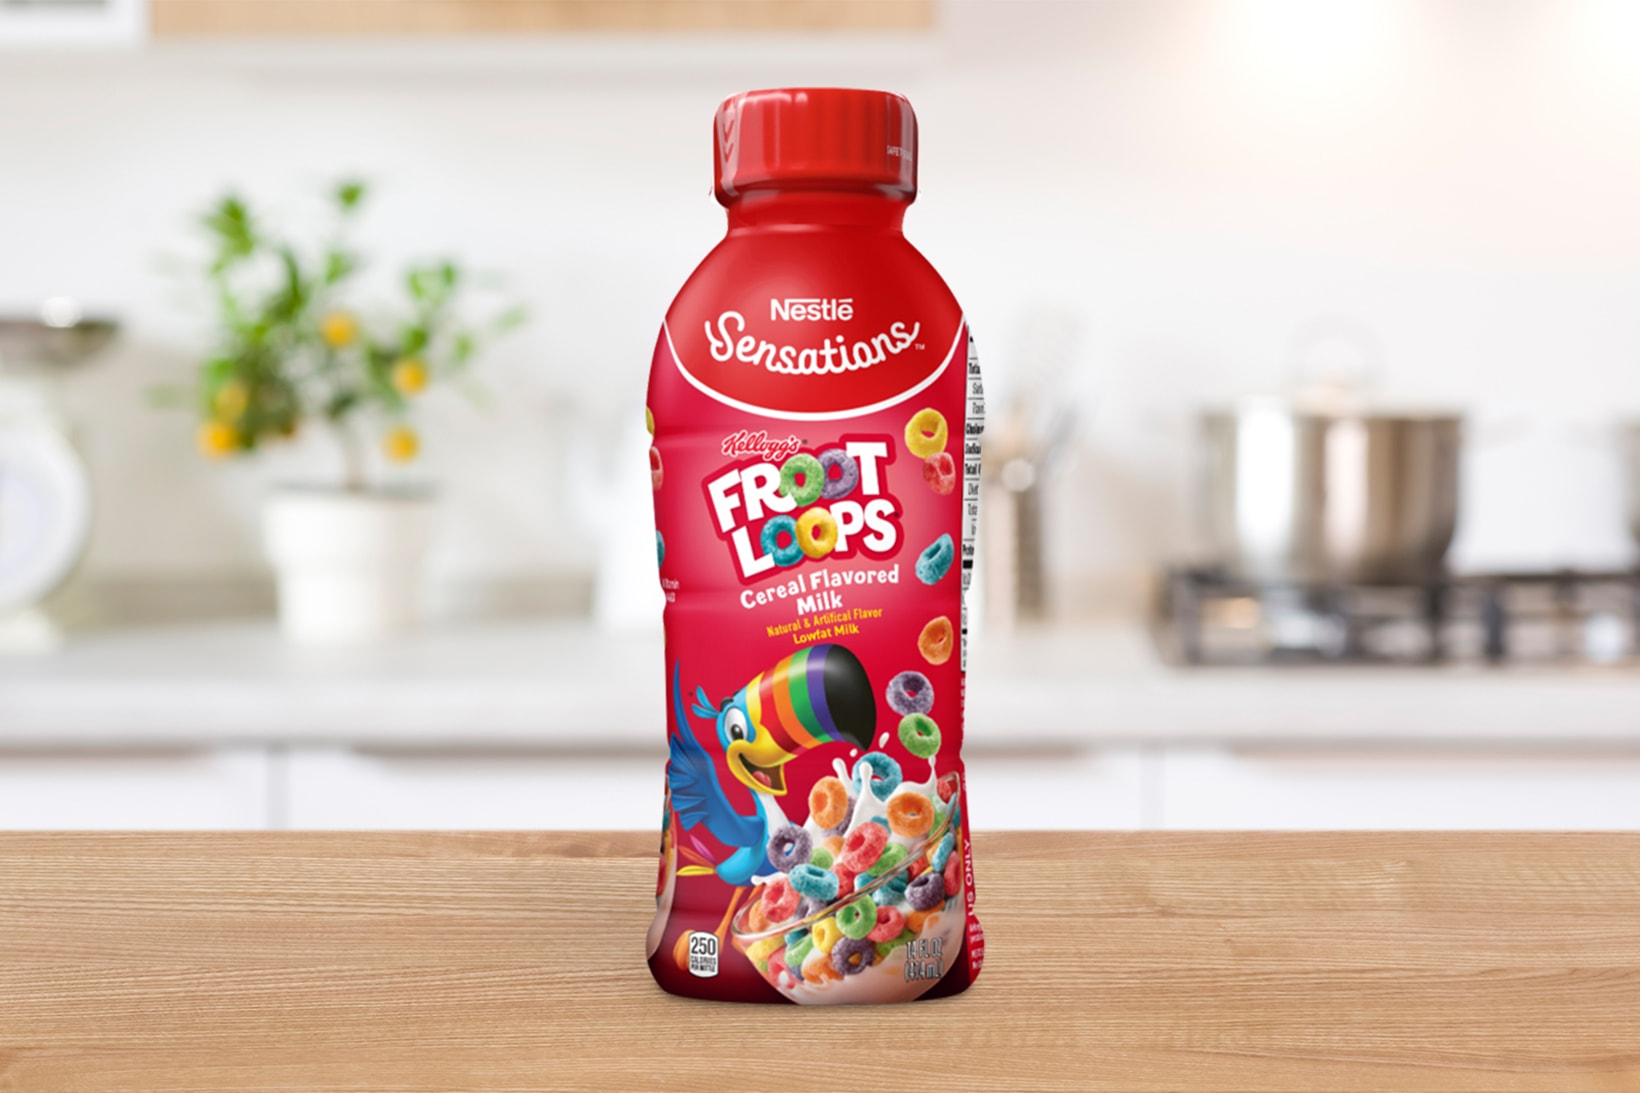 Nestlé Sensations Froot Loops Cereal Flavored Milk